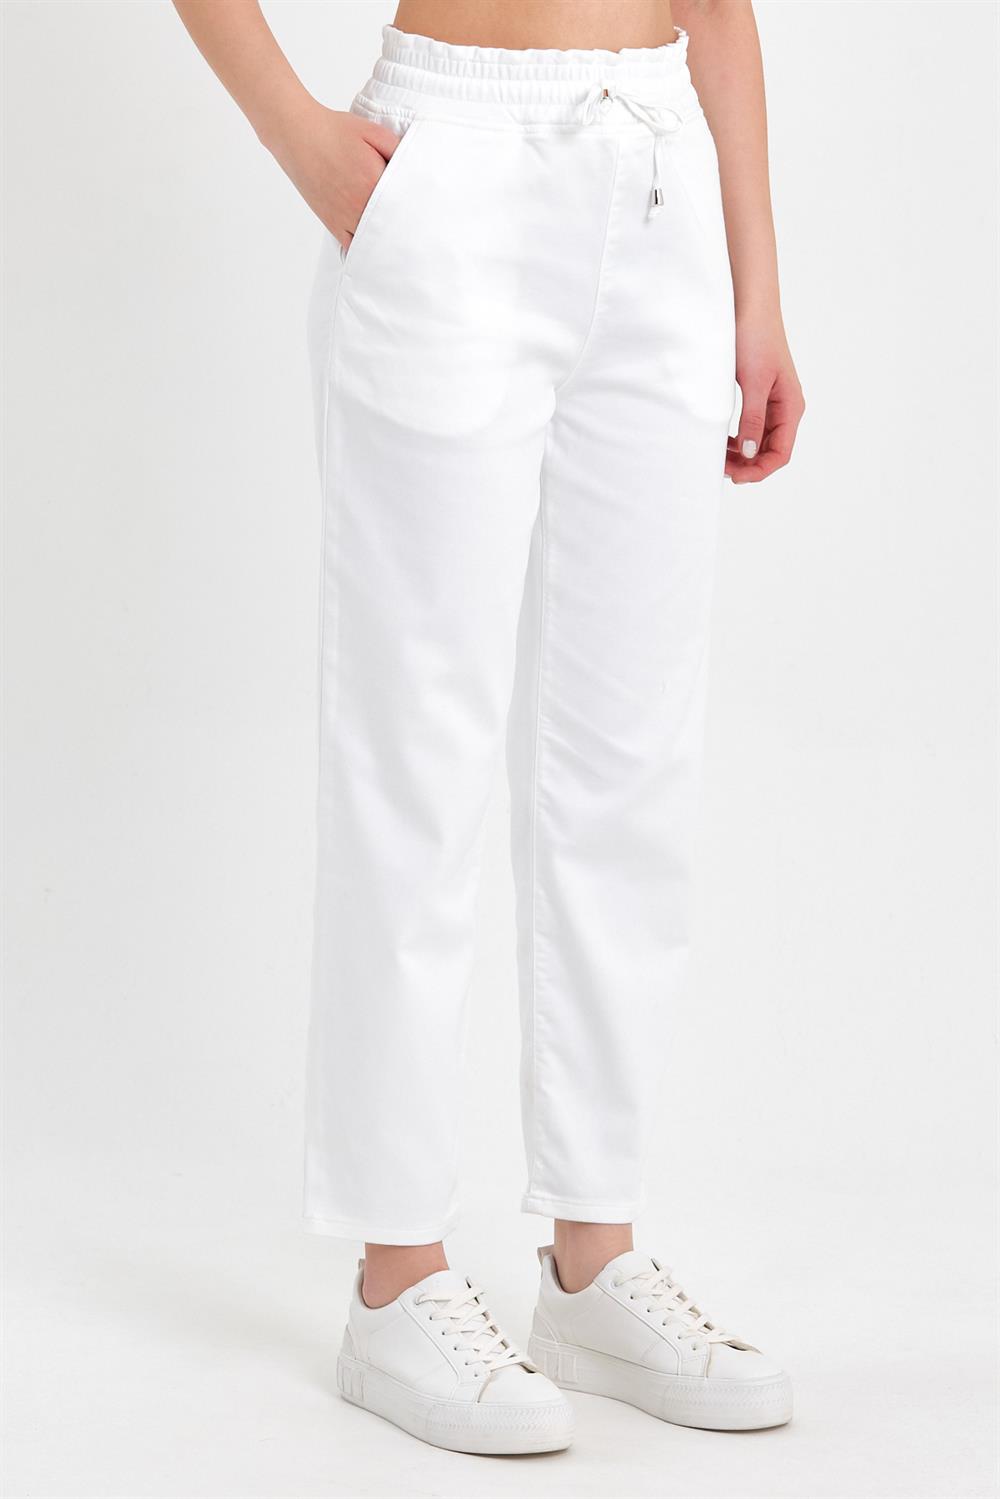 Marla Beyaz Yüksek Bel Slouchy Pantolon